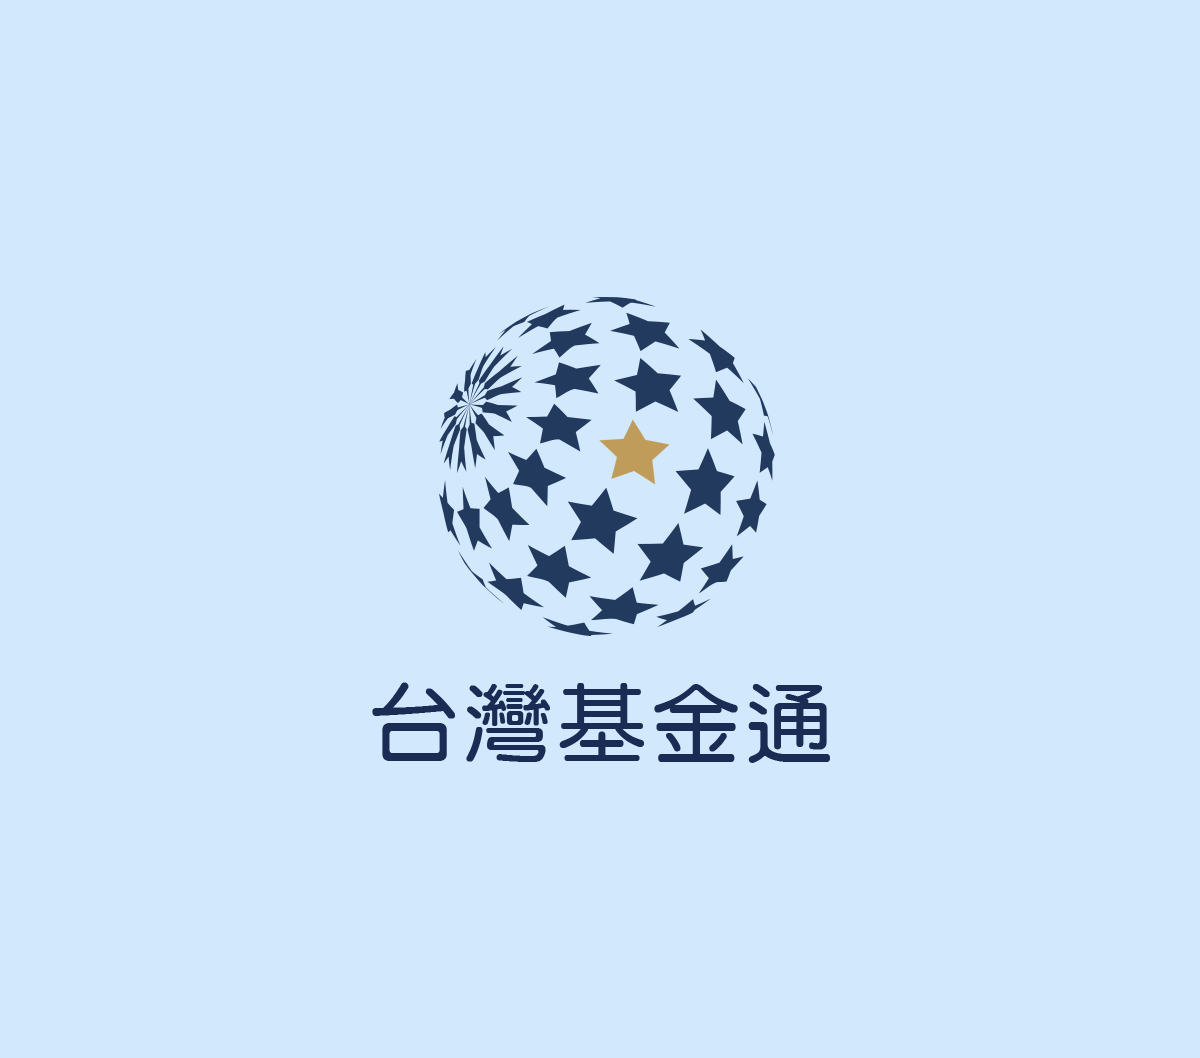 Taiwan Fund Pass Logo Design